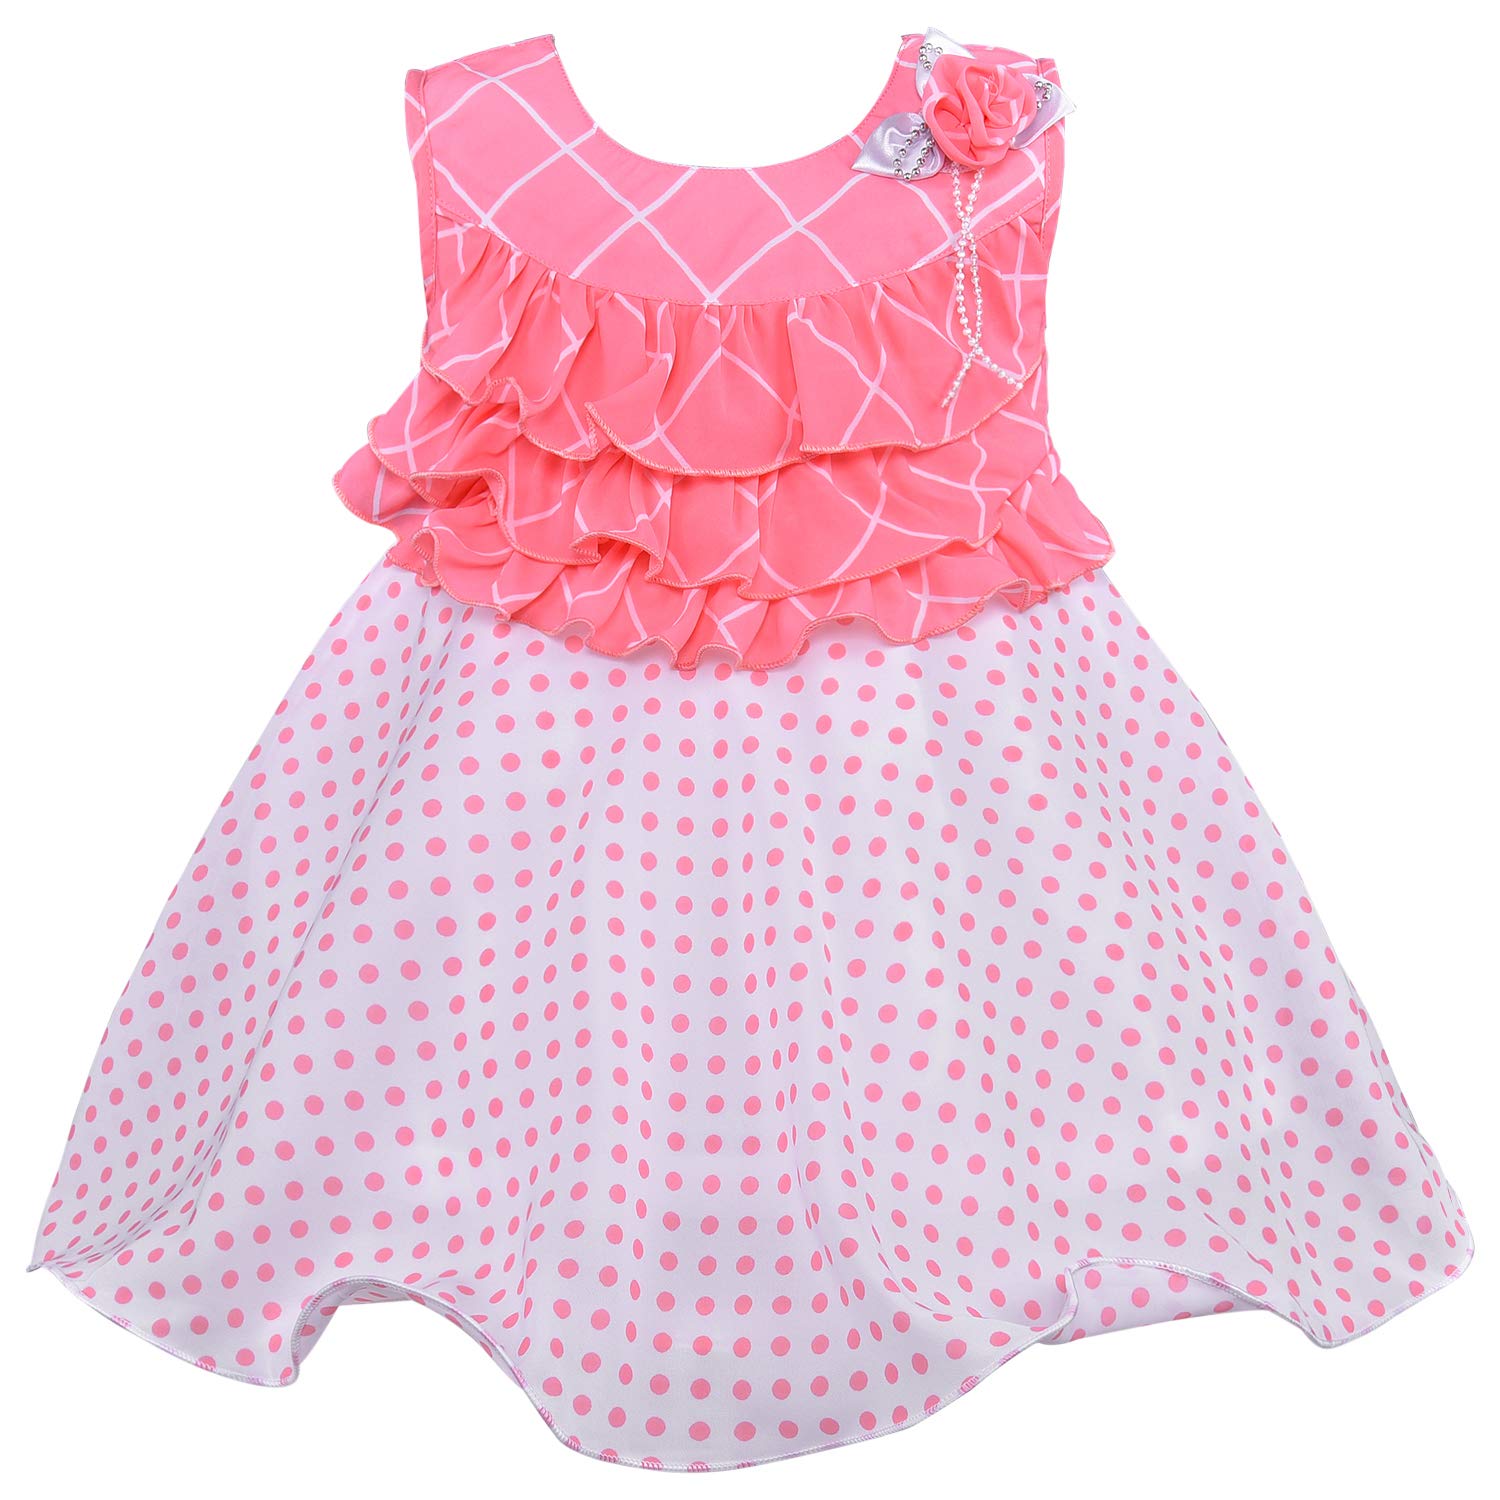 Baby Girls Dress Frock-fe2813pch - Wish Karo Party Wear - frocks Party Wear - baby dress